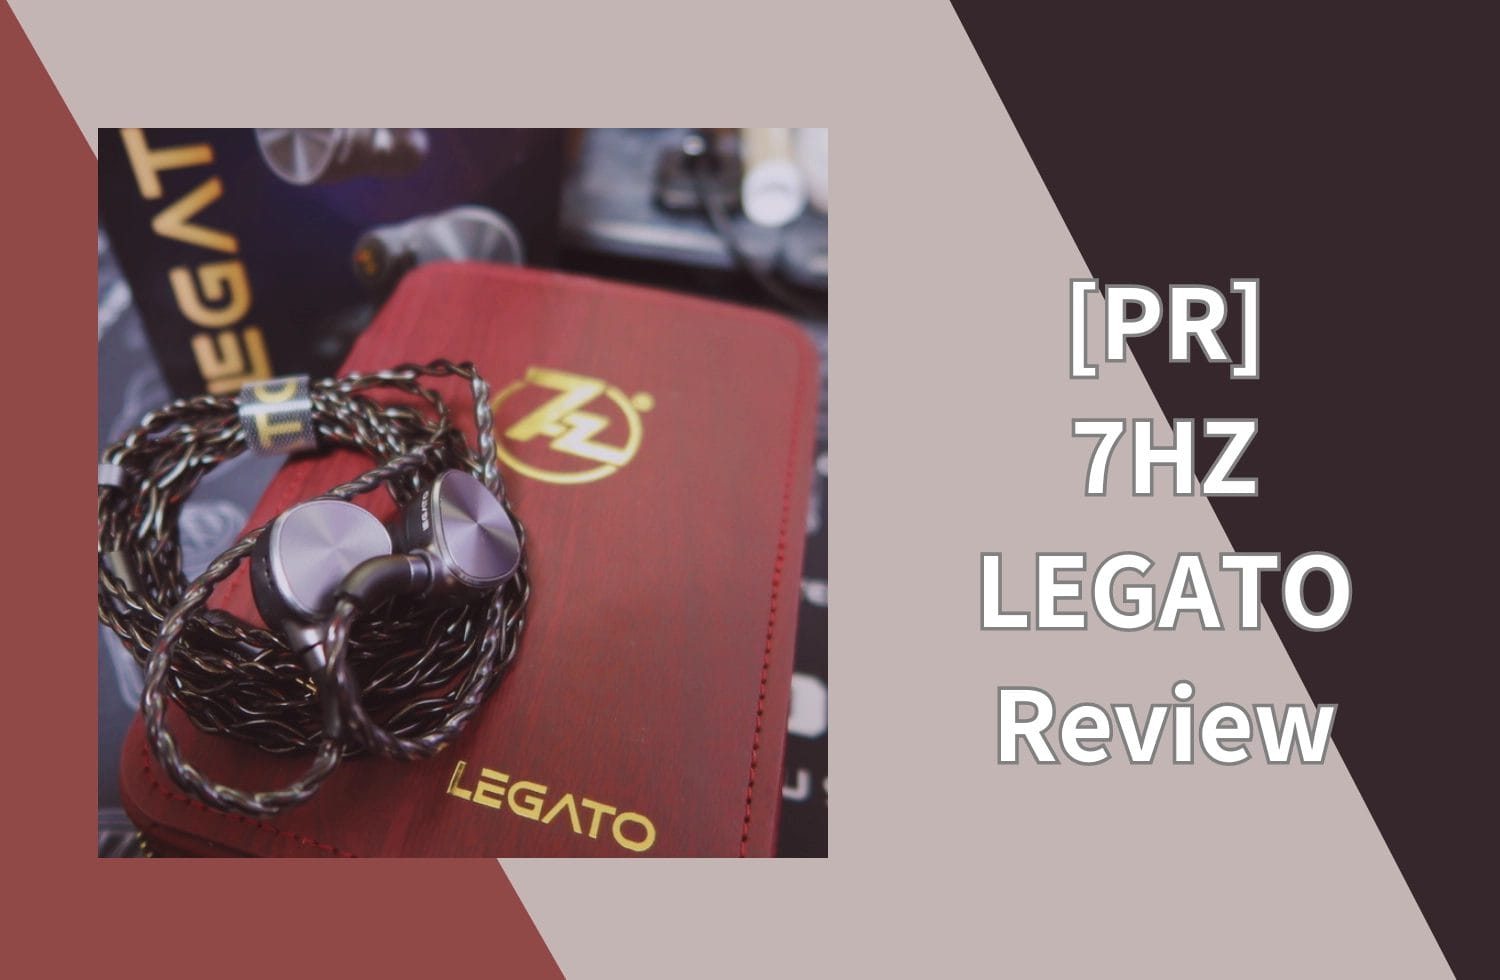 [pr] 7hz Legato Review